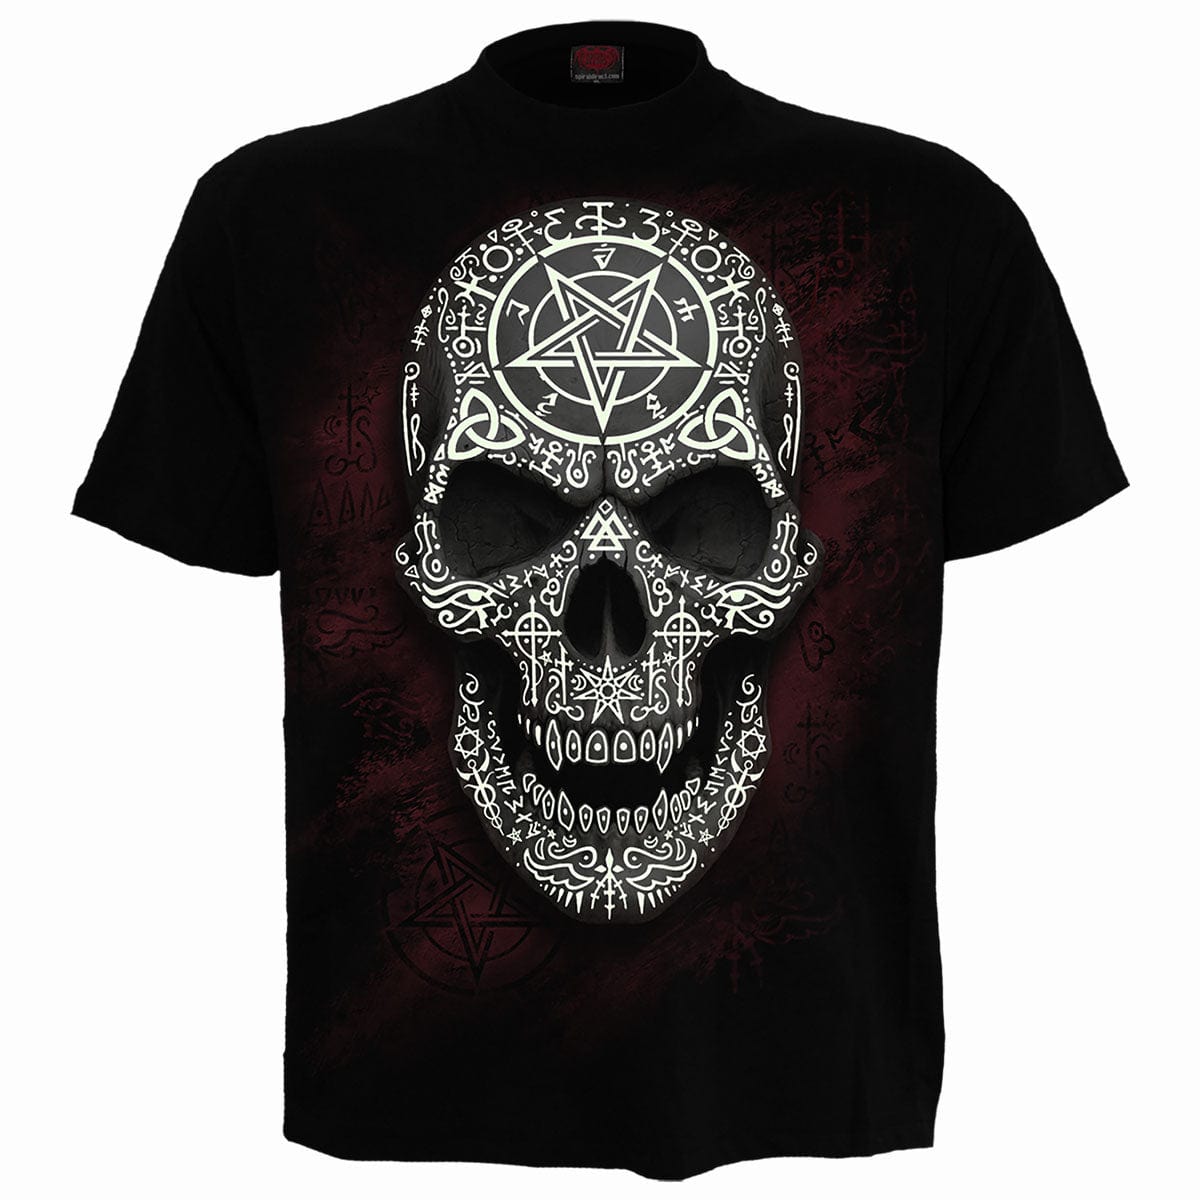 GOTHIC RUNES - GLOW IN THE DARK - Front Print T-Shirt Black - Spiral USA